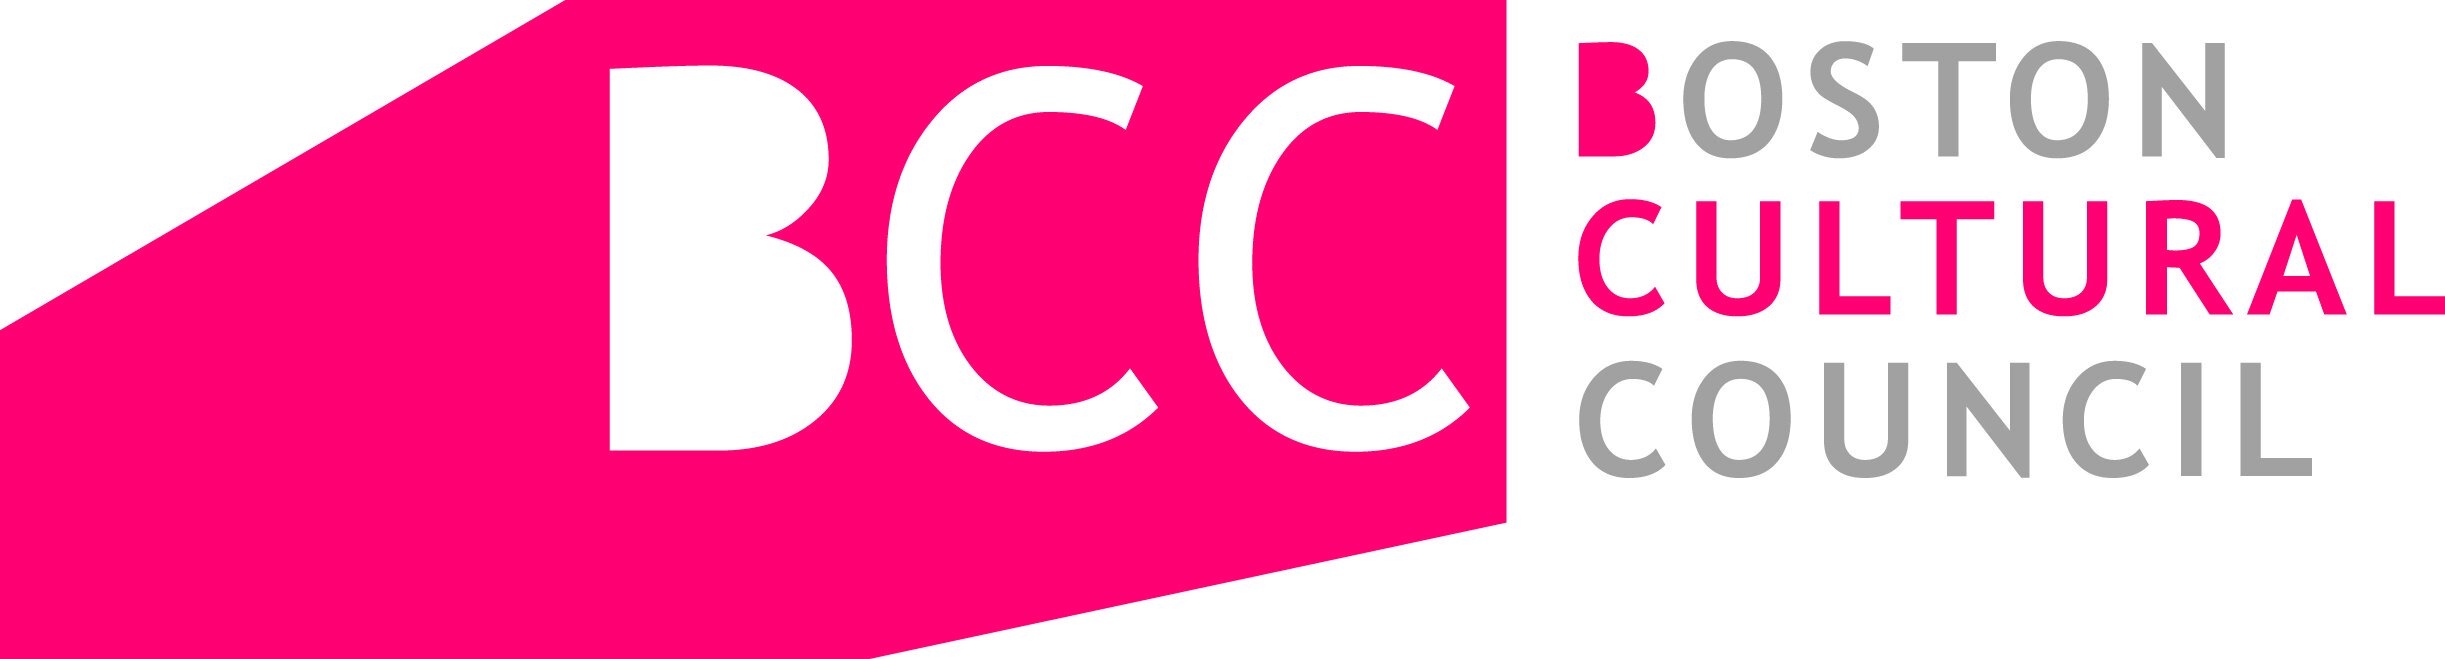 Boston-Cultural-Council-logo.jpeg